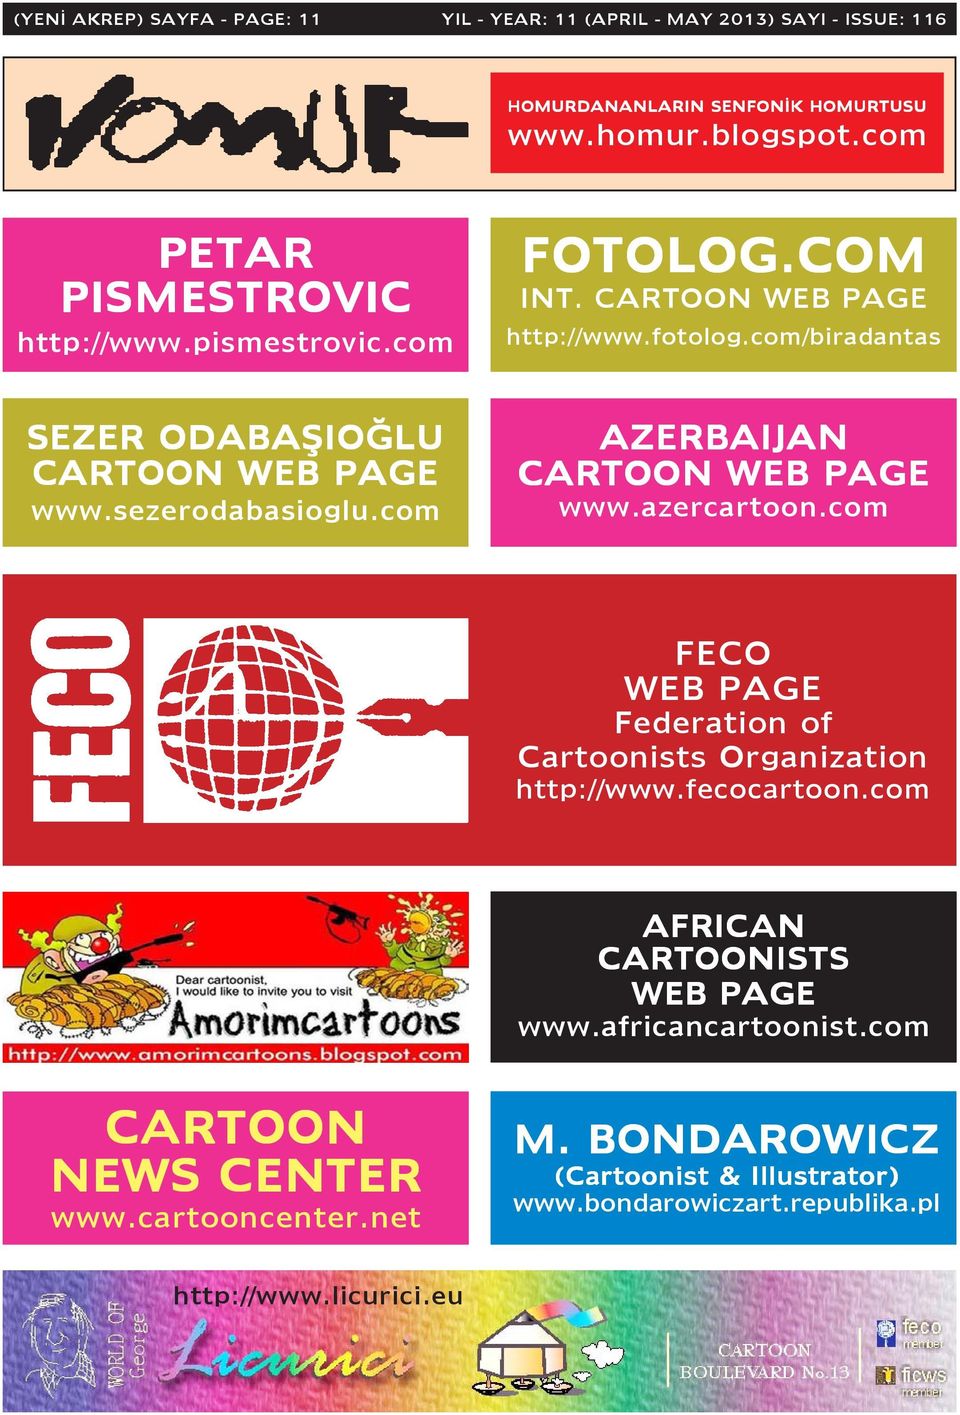 sezerodabasioglu.com AZERBAIJAN CARTOON WEB PAGE www.azercartoon.com FECO WEB PAGE Federation of Cartoonists Organization http://www.fecocartoon.